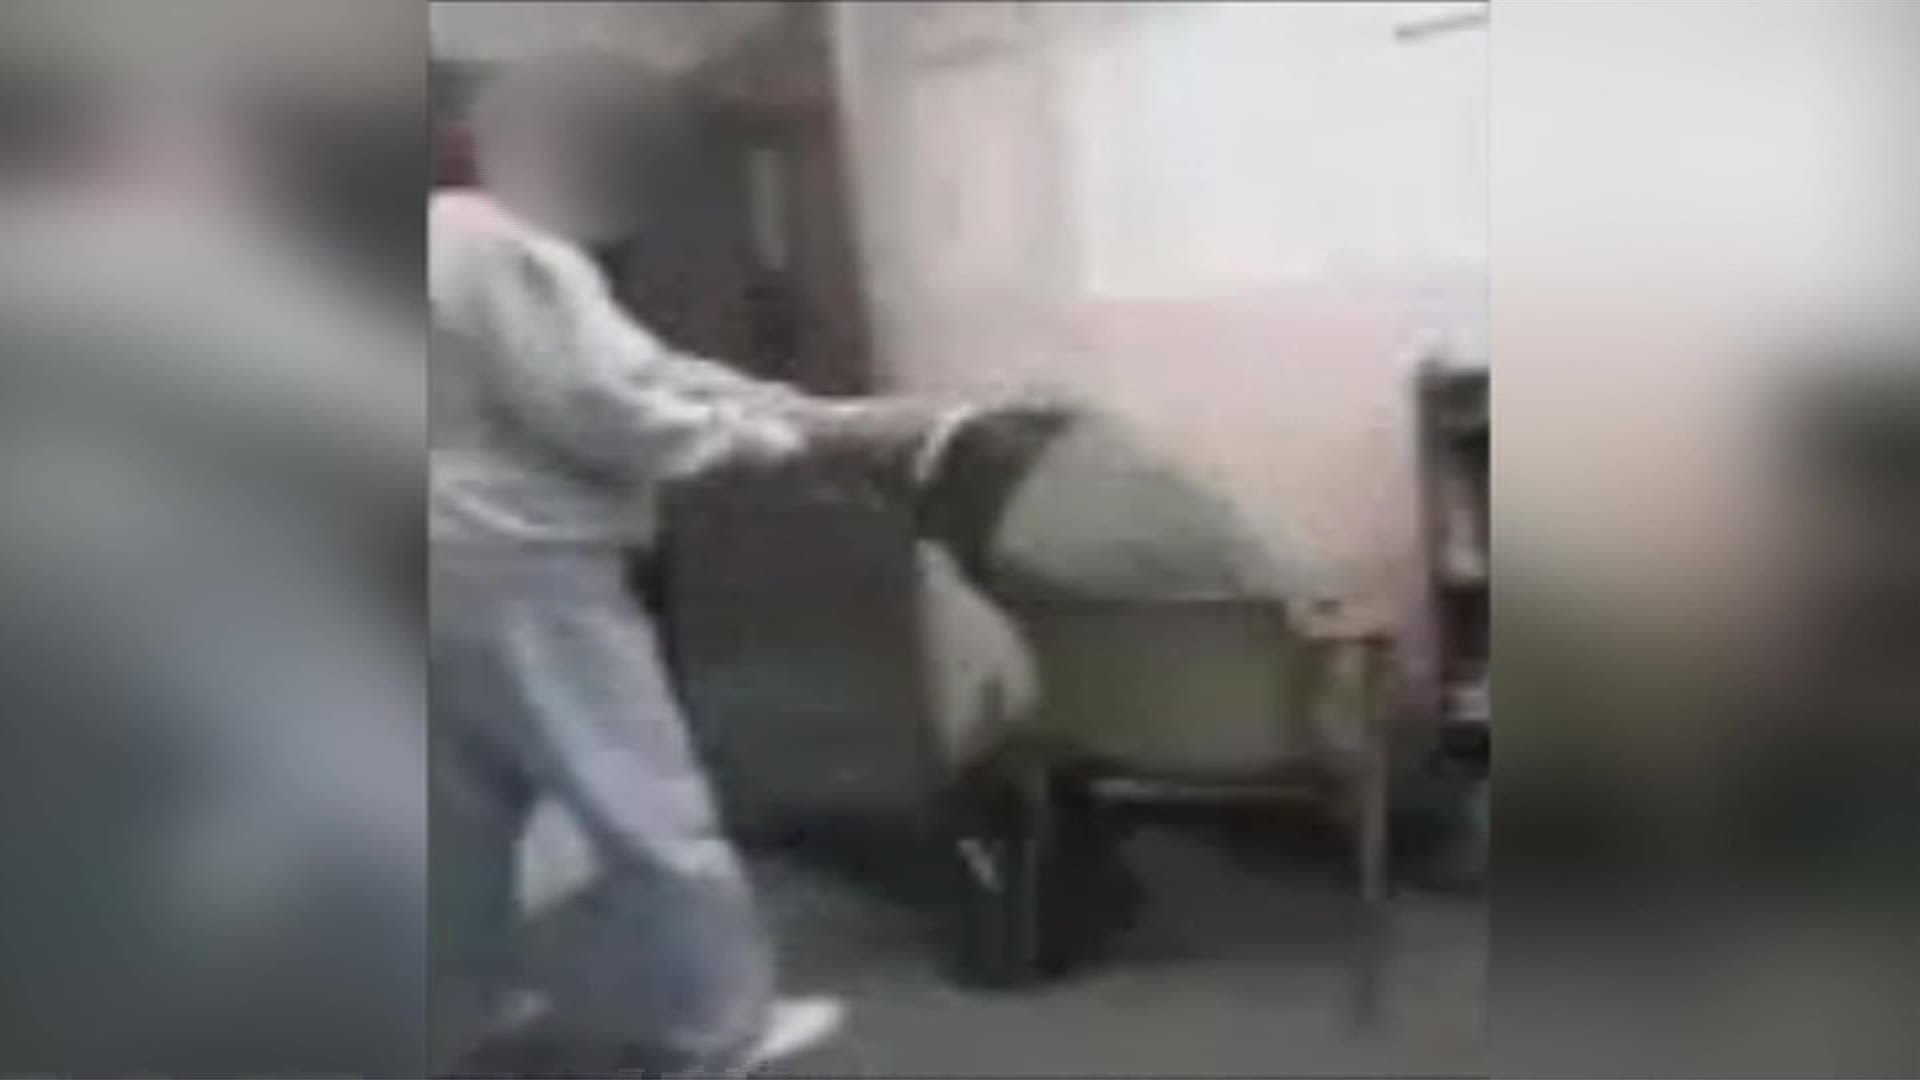 Teacher seen on camera dragging student by hoodie | CNN